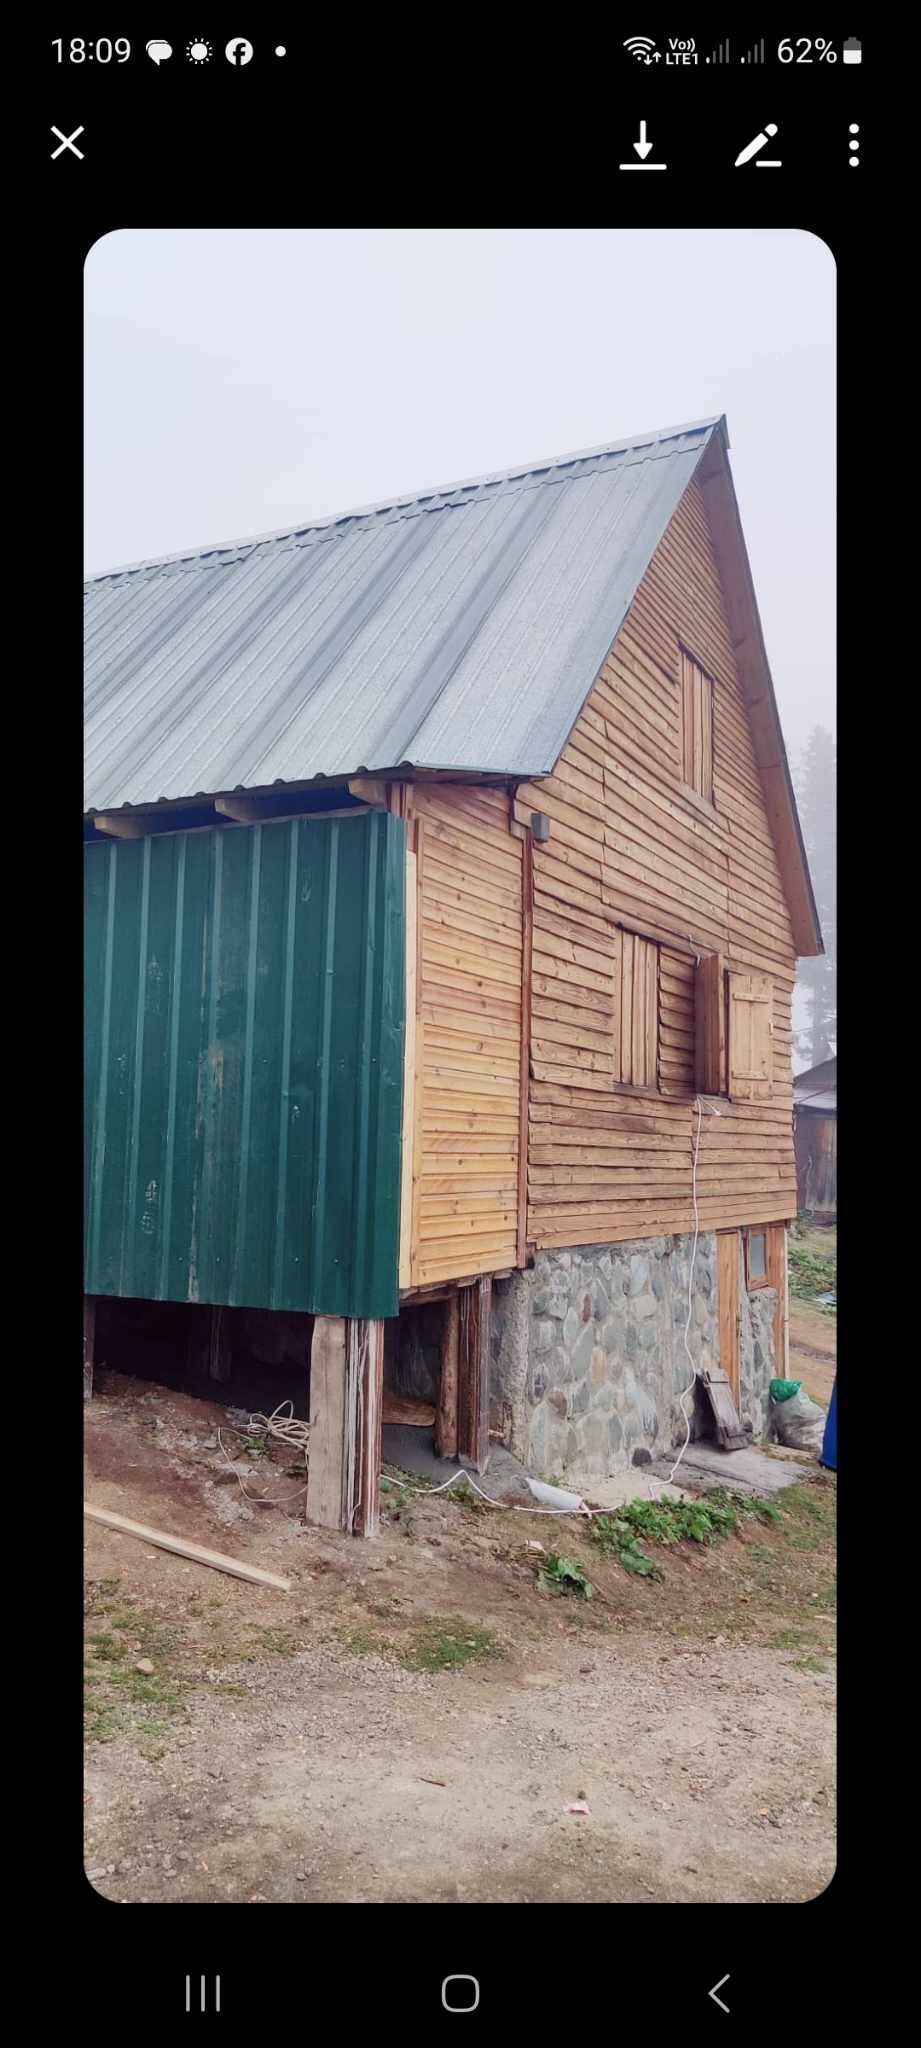 Dato’s cottage in Bakhmaro